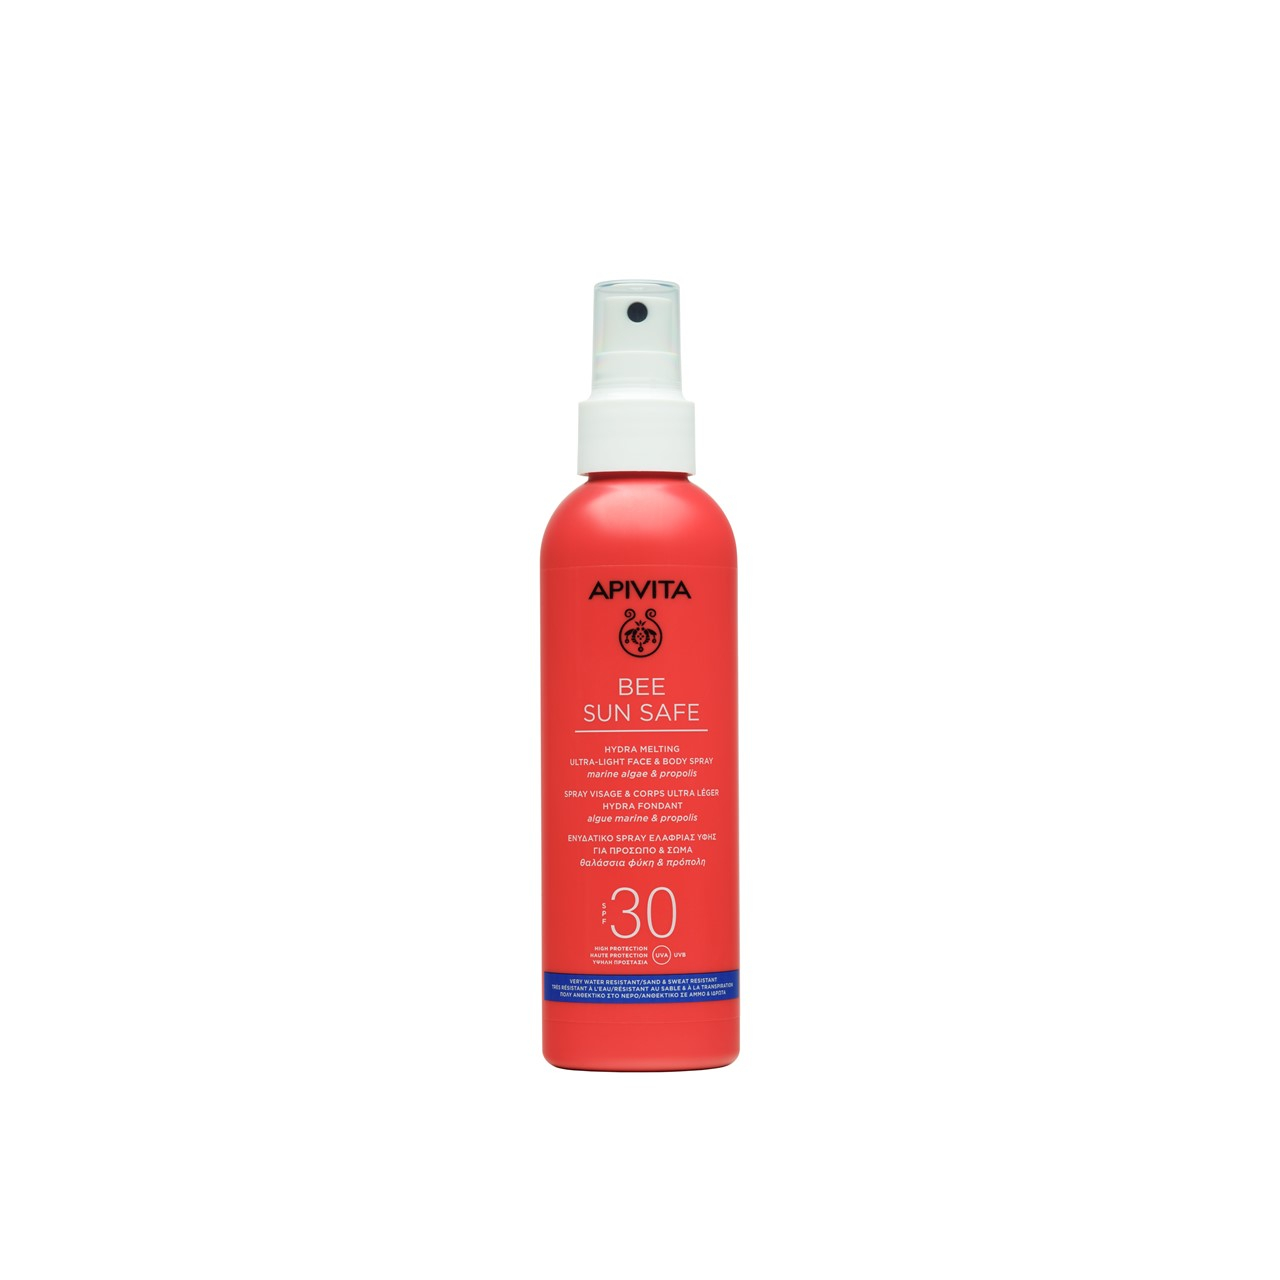 APIVITA Bee Sun Safe Hydra Melting Face & Body Spray SPF30 200ml